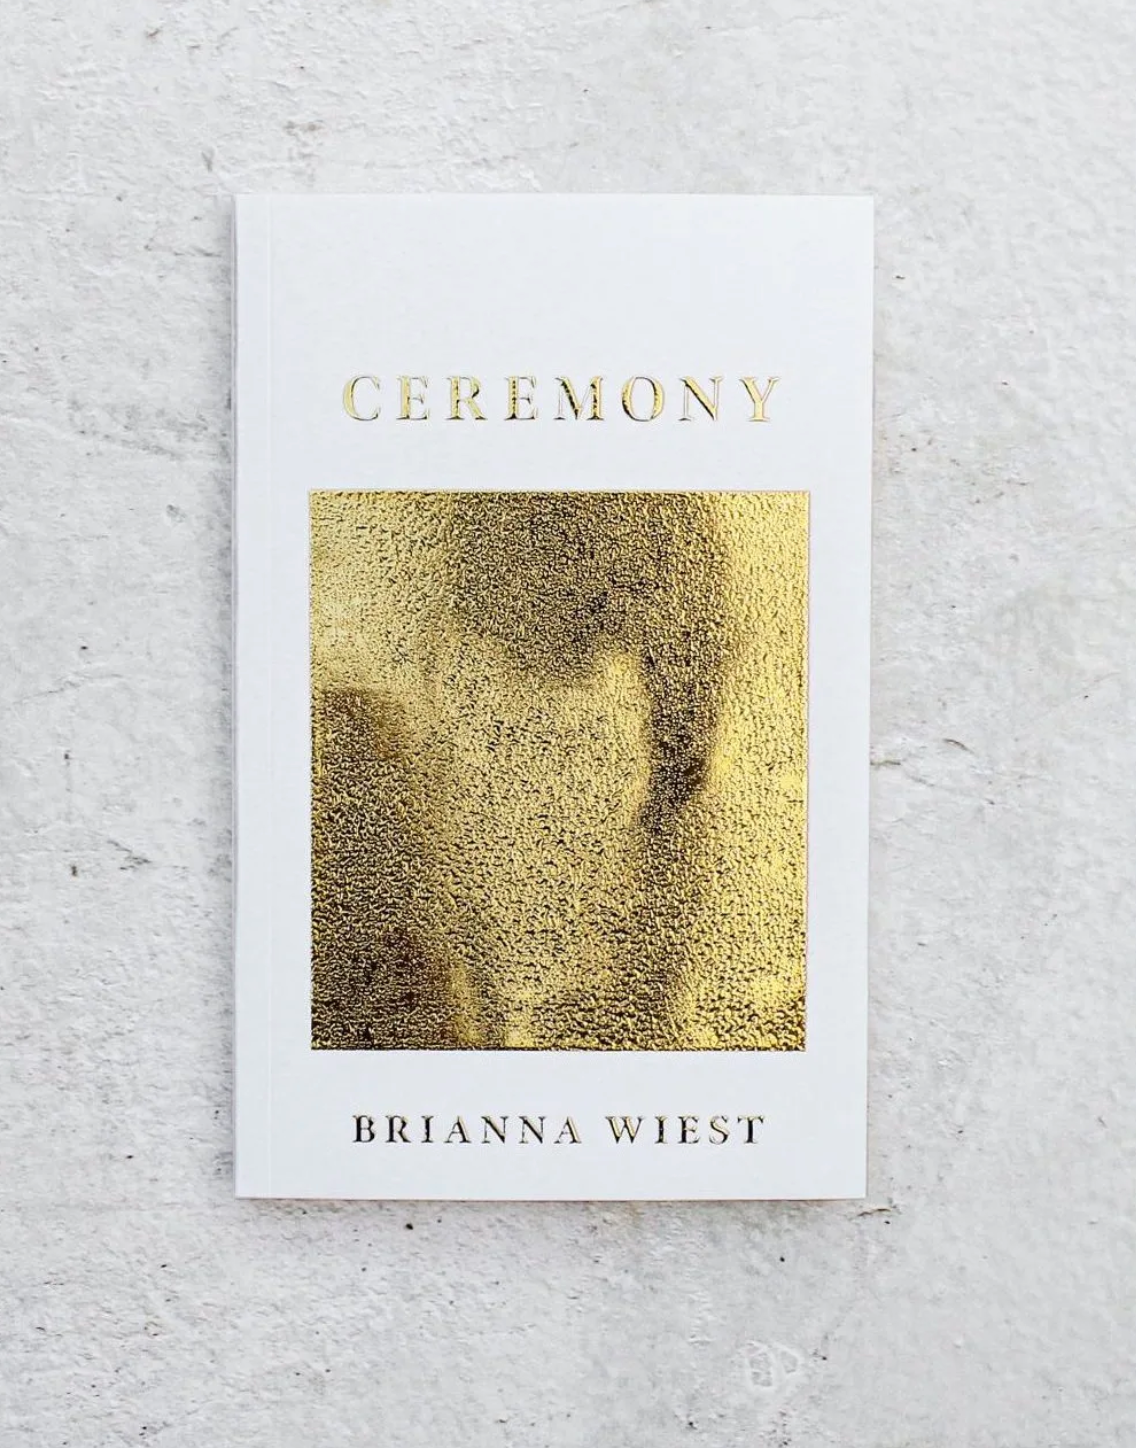 Ceremony Book by Brianna Wiest